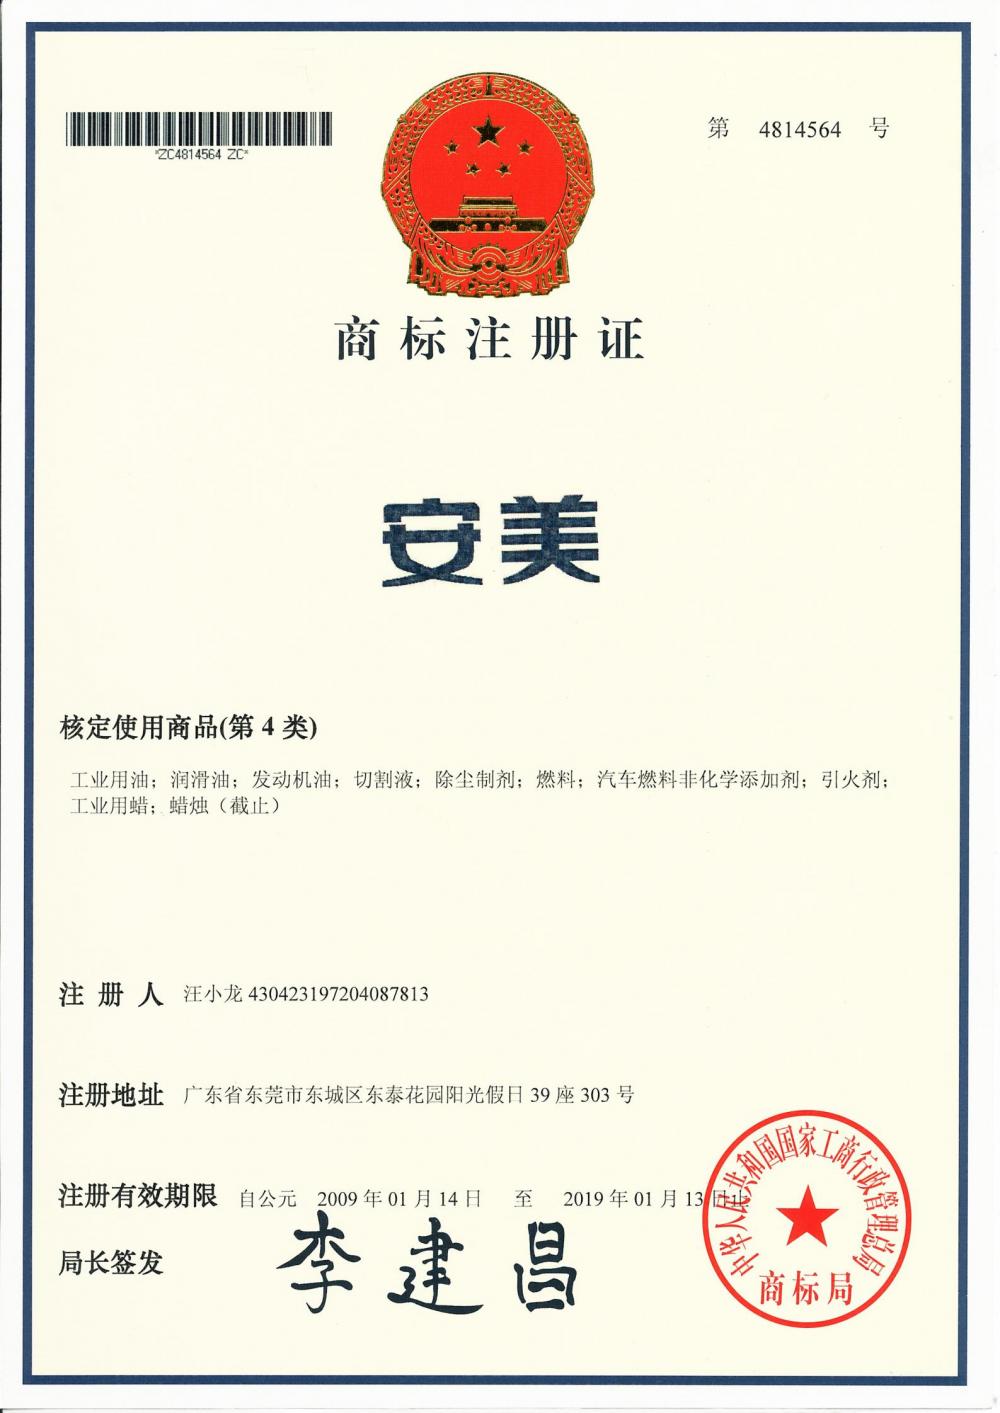 Anmei - Trademark registration certificate